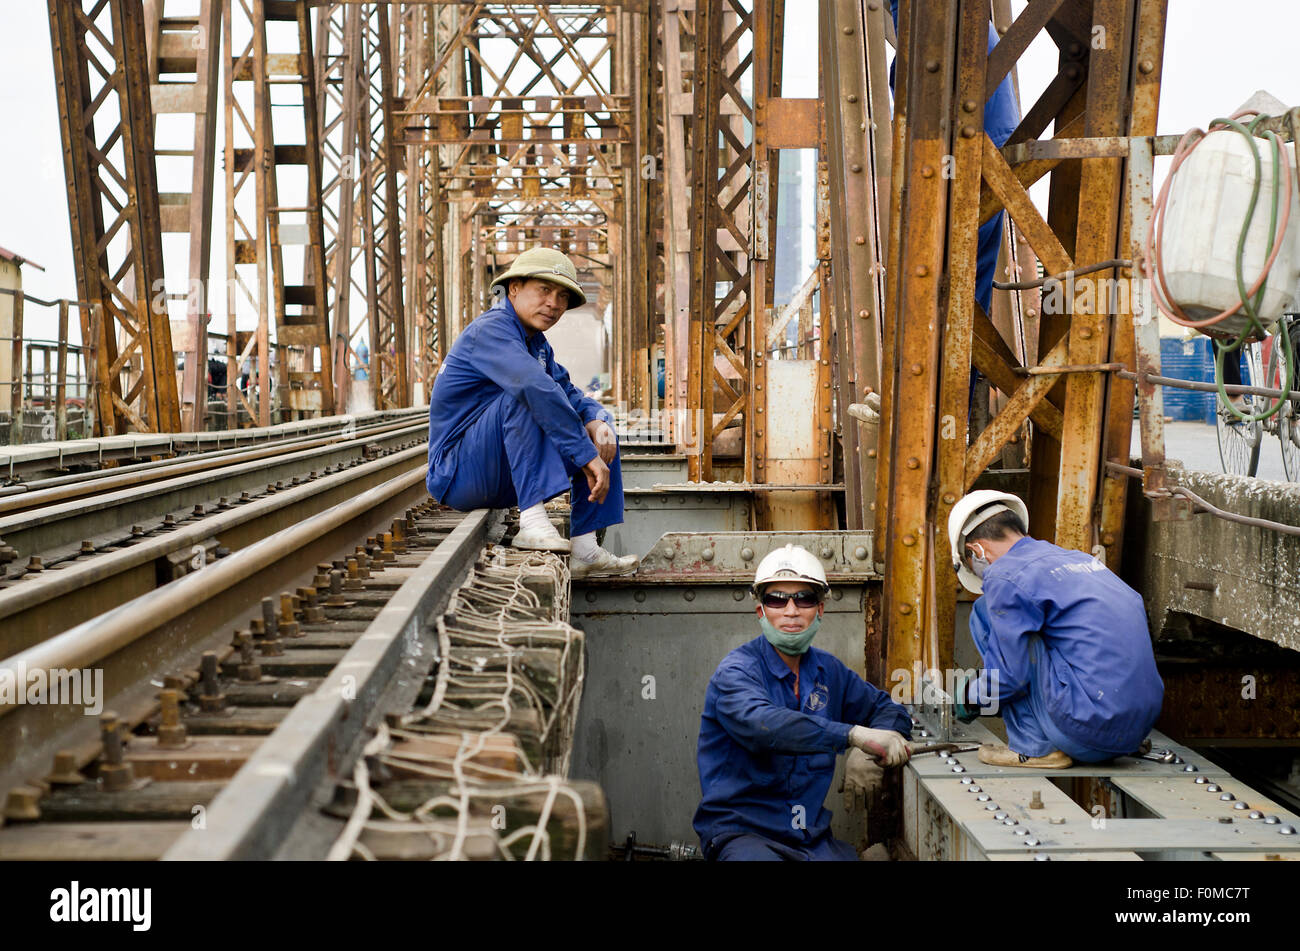 Workers on the Long Bien bridge, Hanoi,Vietnam Stock Photo